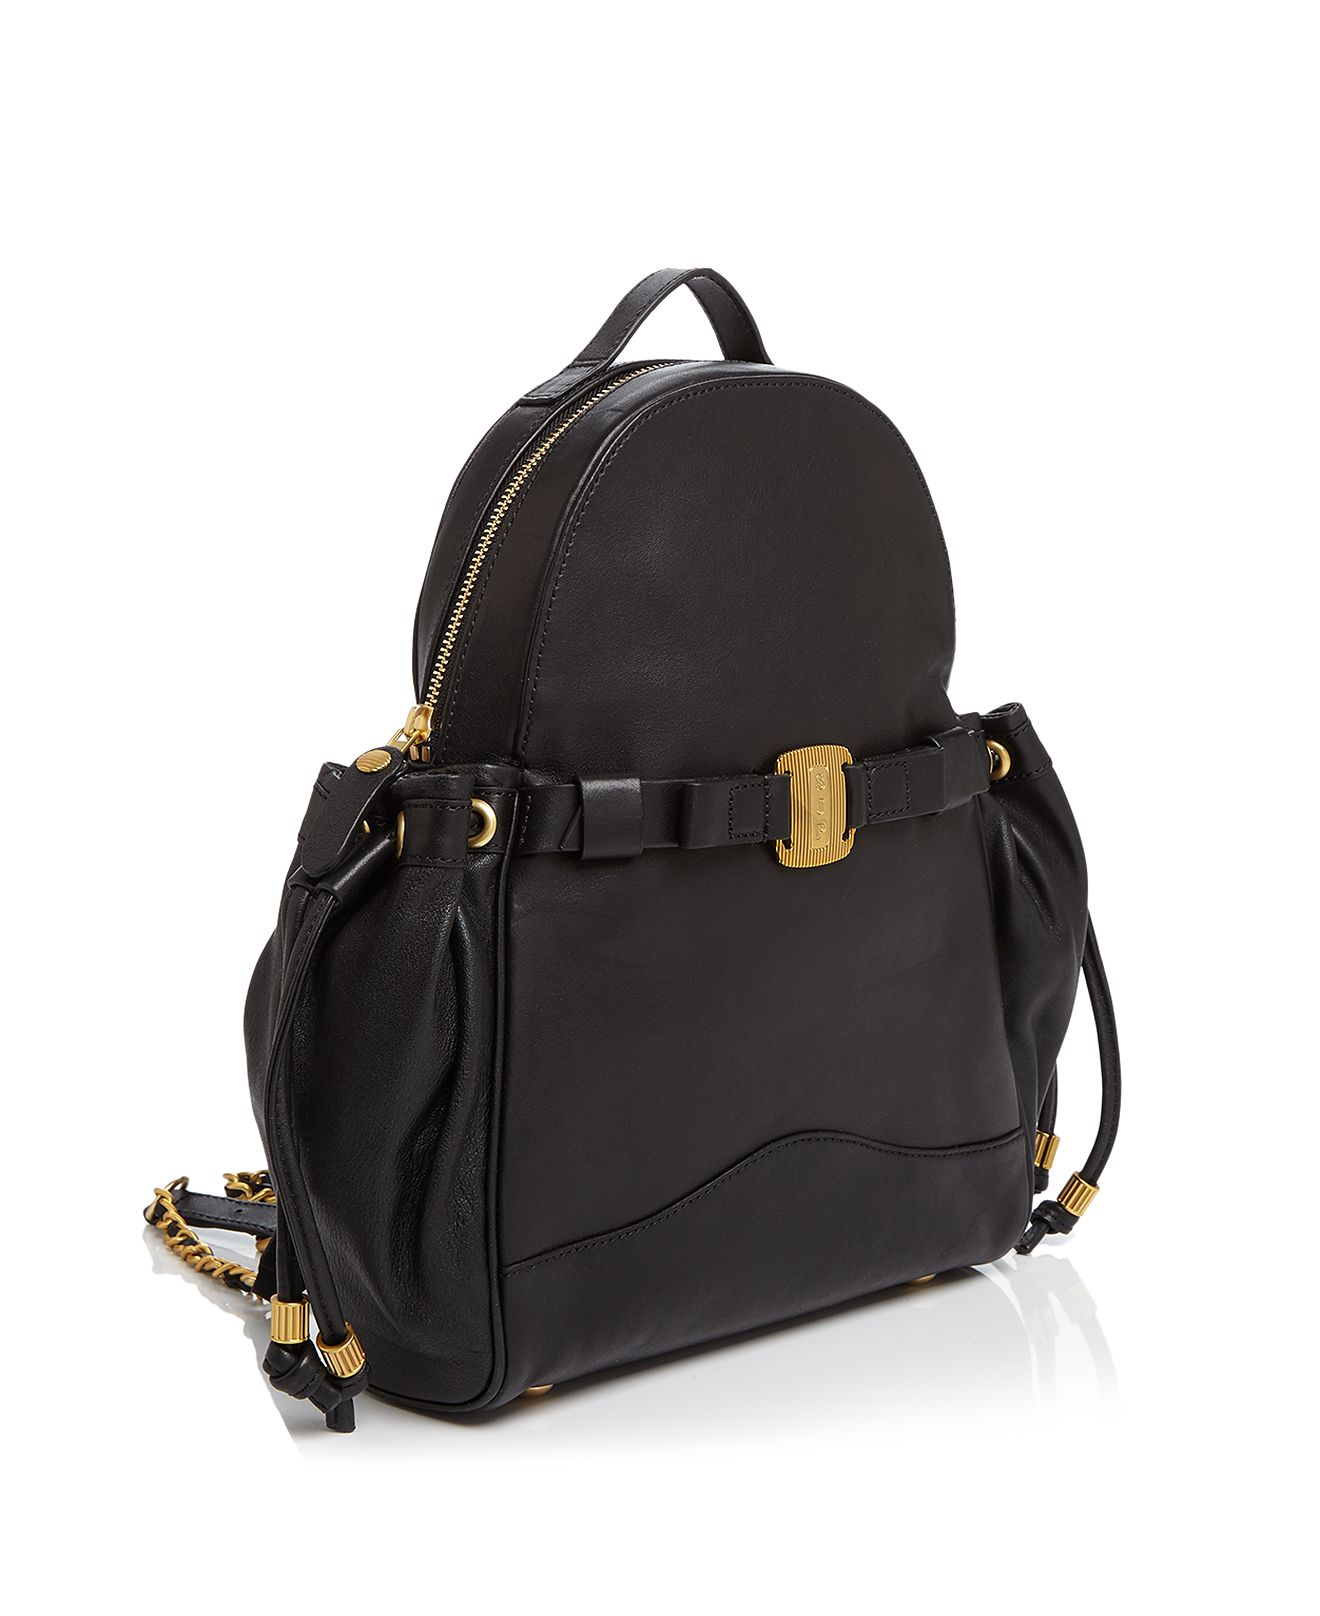 SJP by Sarah Jessica Parker Leather Uni Backpack in Black/Gold (Black) - Lyst